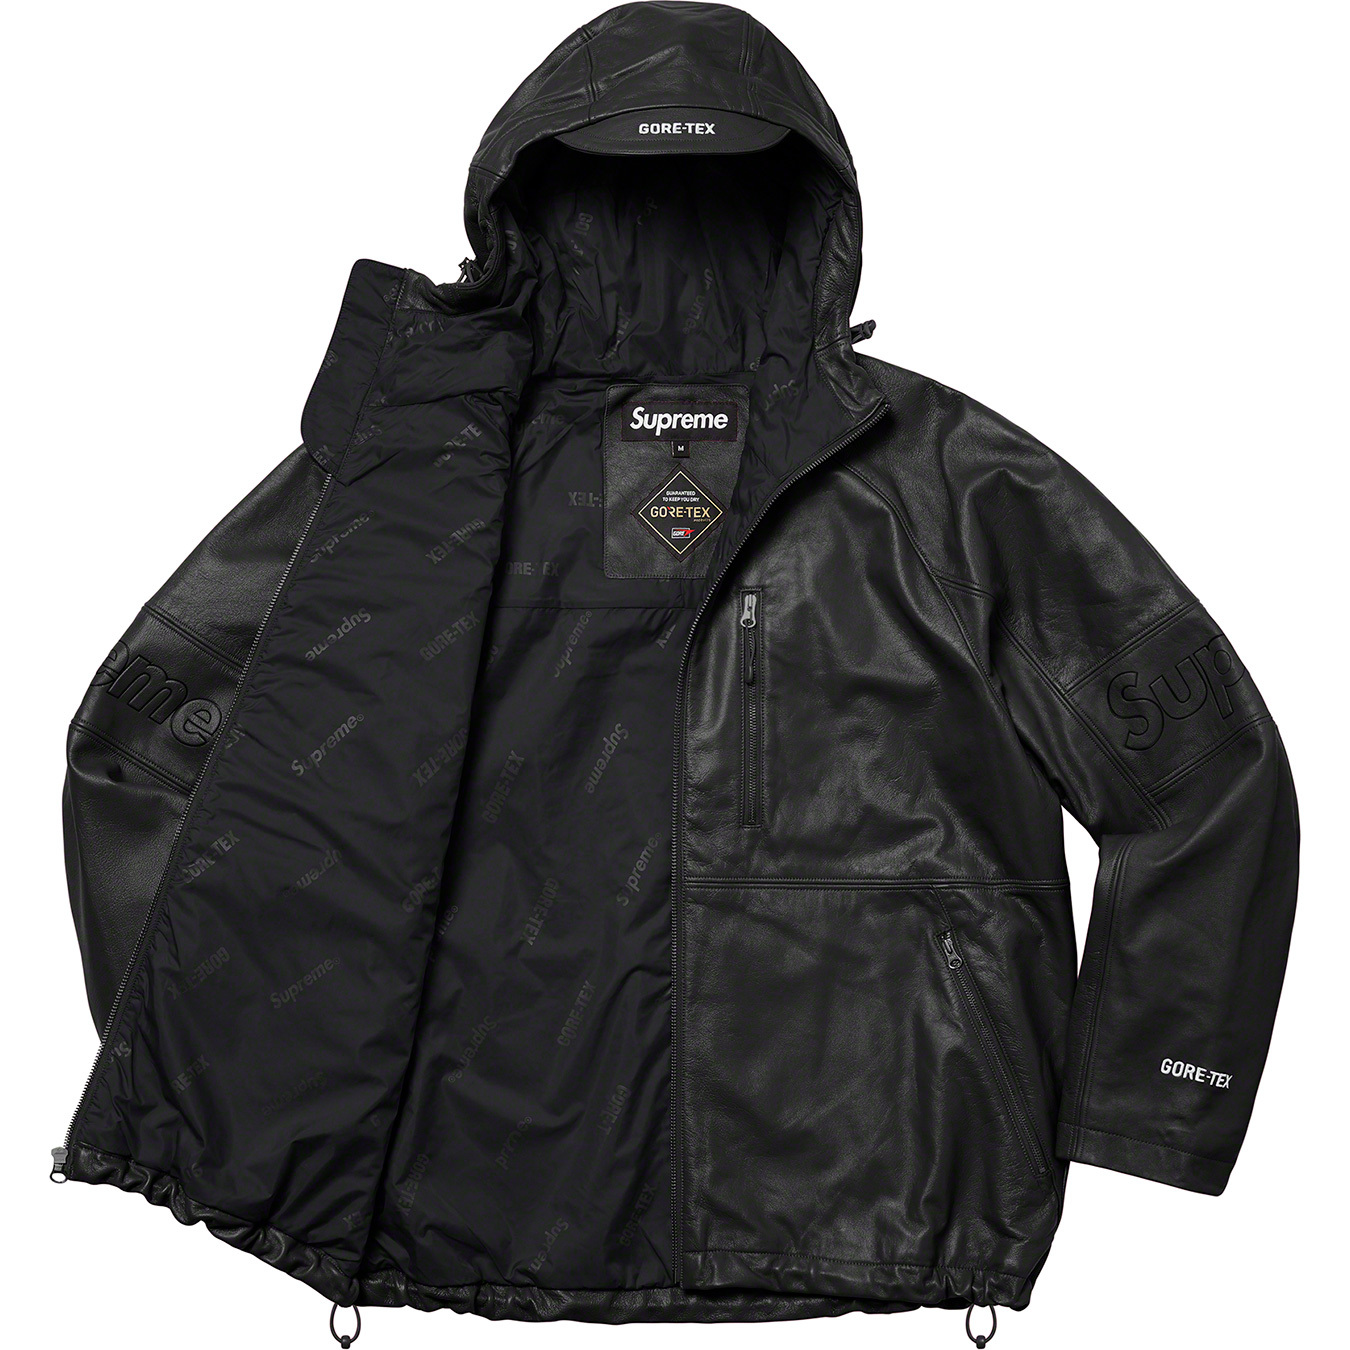 Supreme GORE-TEX Leather Jacket